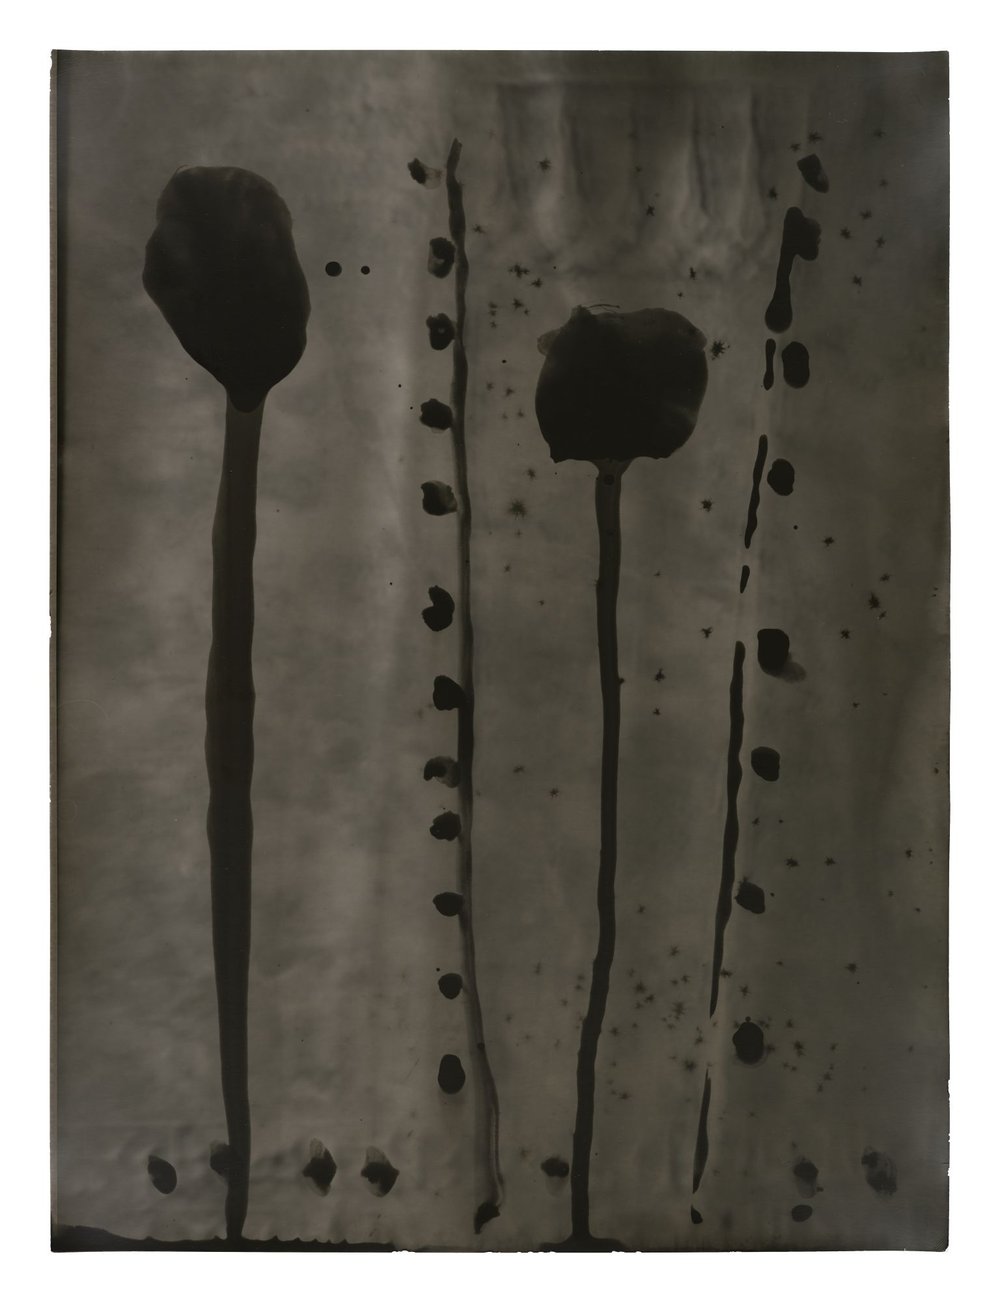 JC 544, Untitled, (W-Series), 40 x 30 cm, Silver Gelatin Print, 2017, Edition of 1.jpg